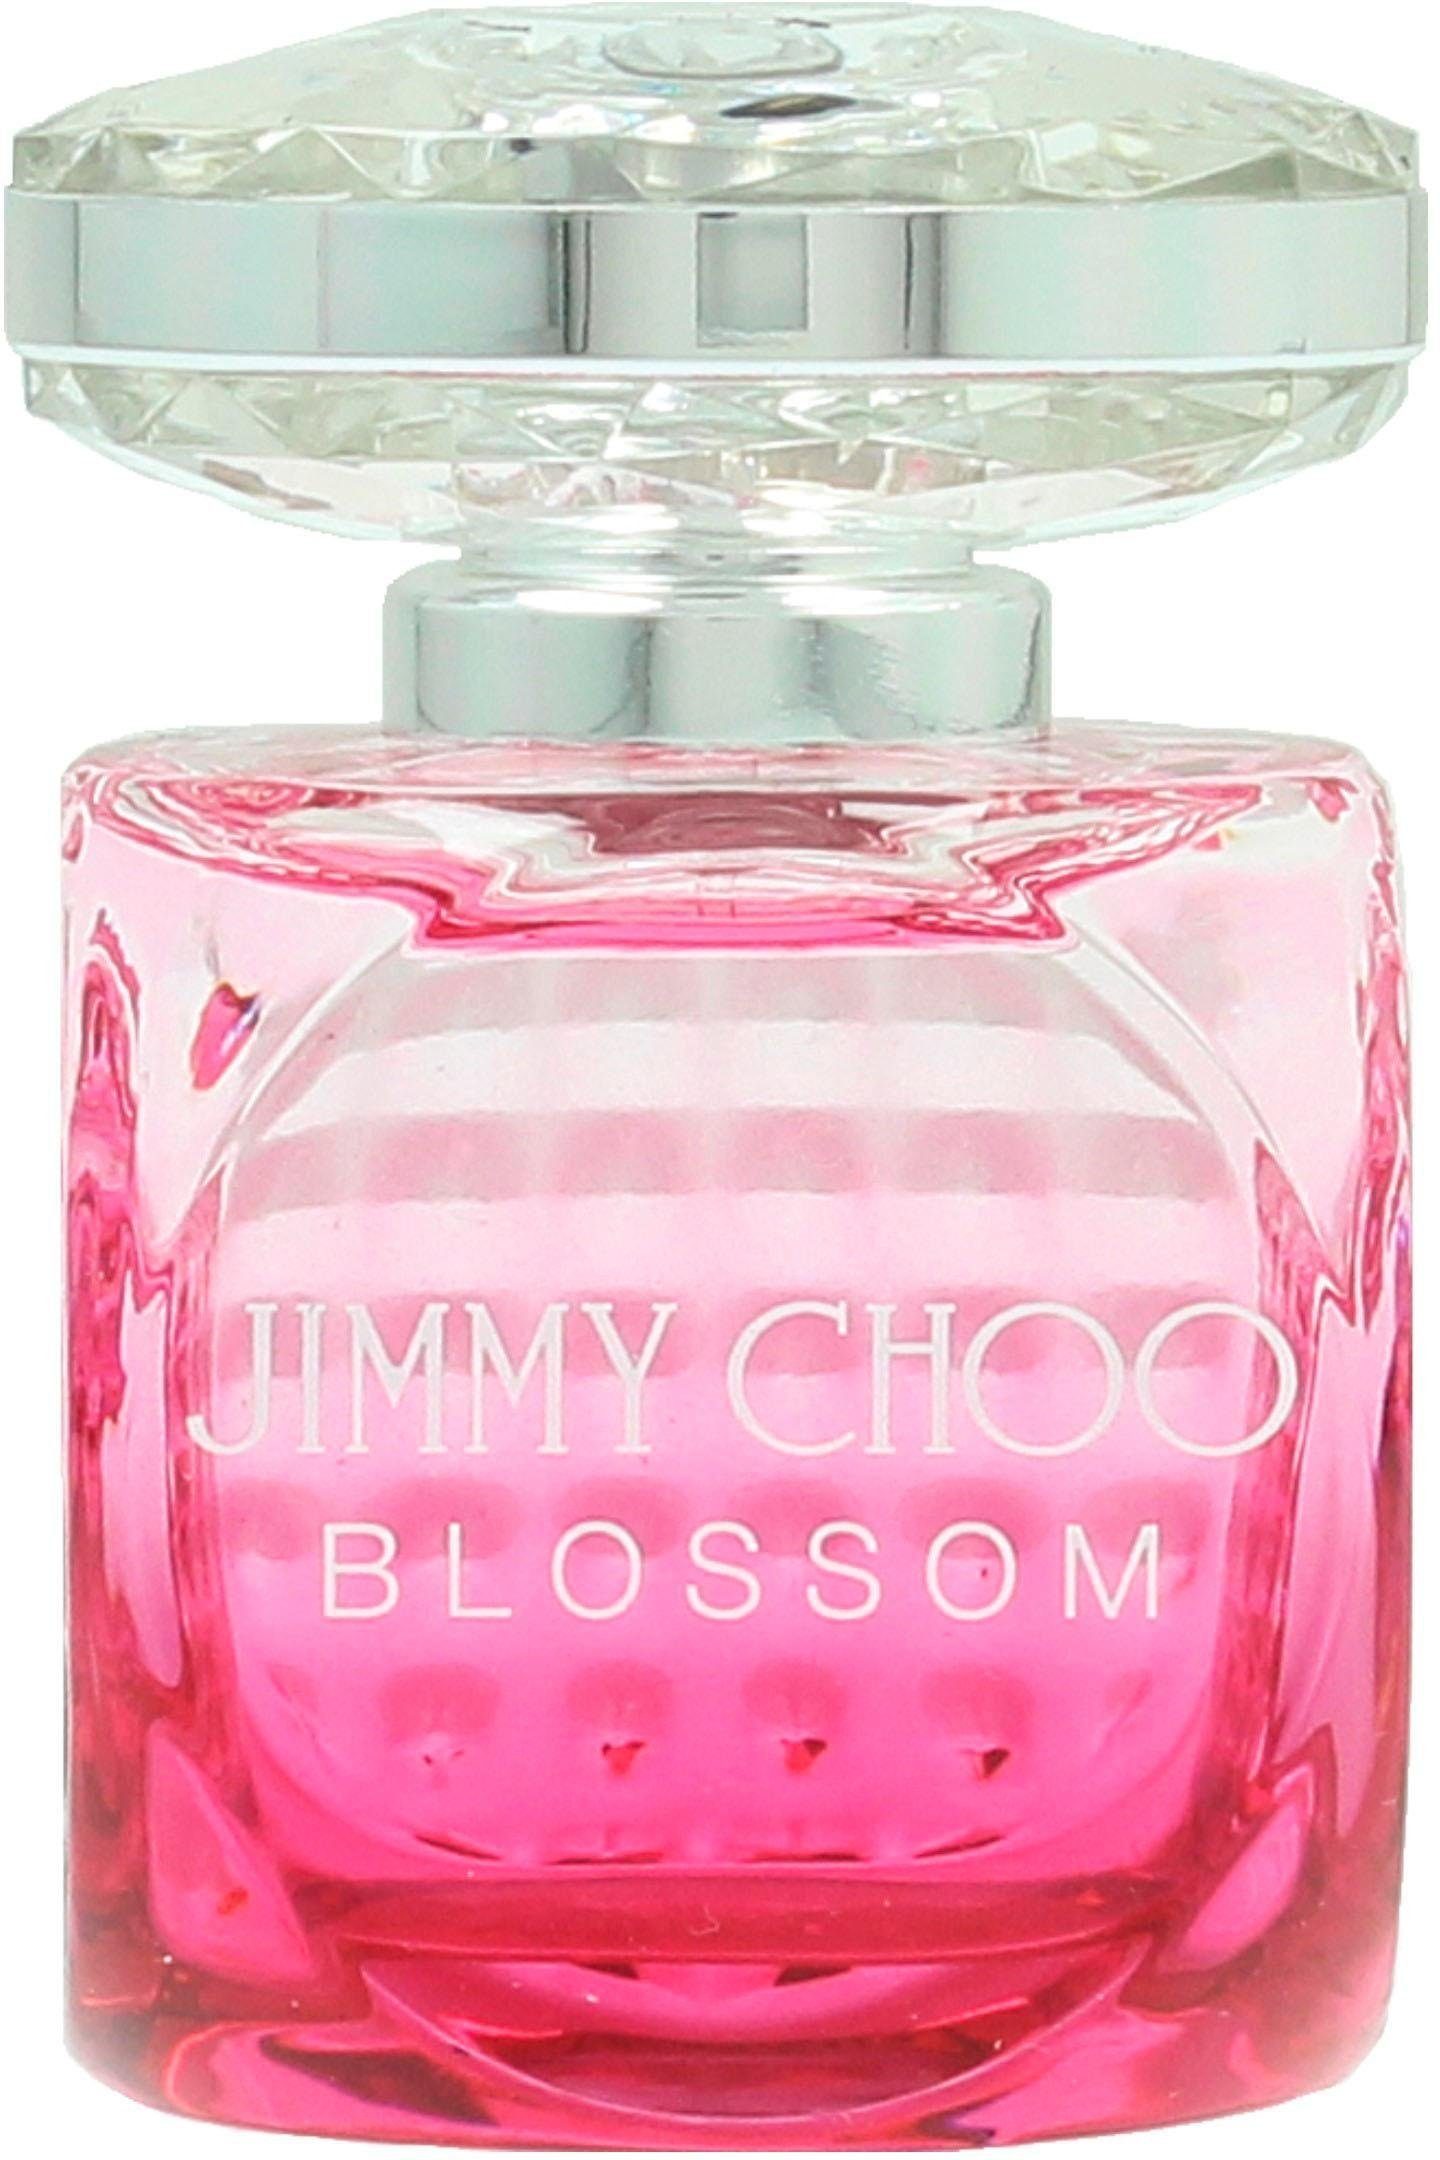 JIMMY CHOO Blossom Parfum Eau de